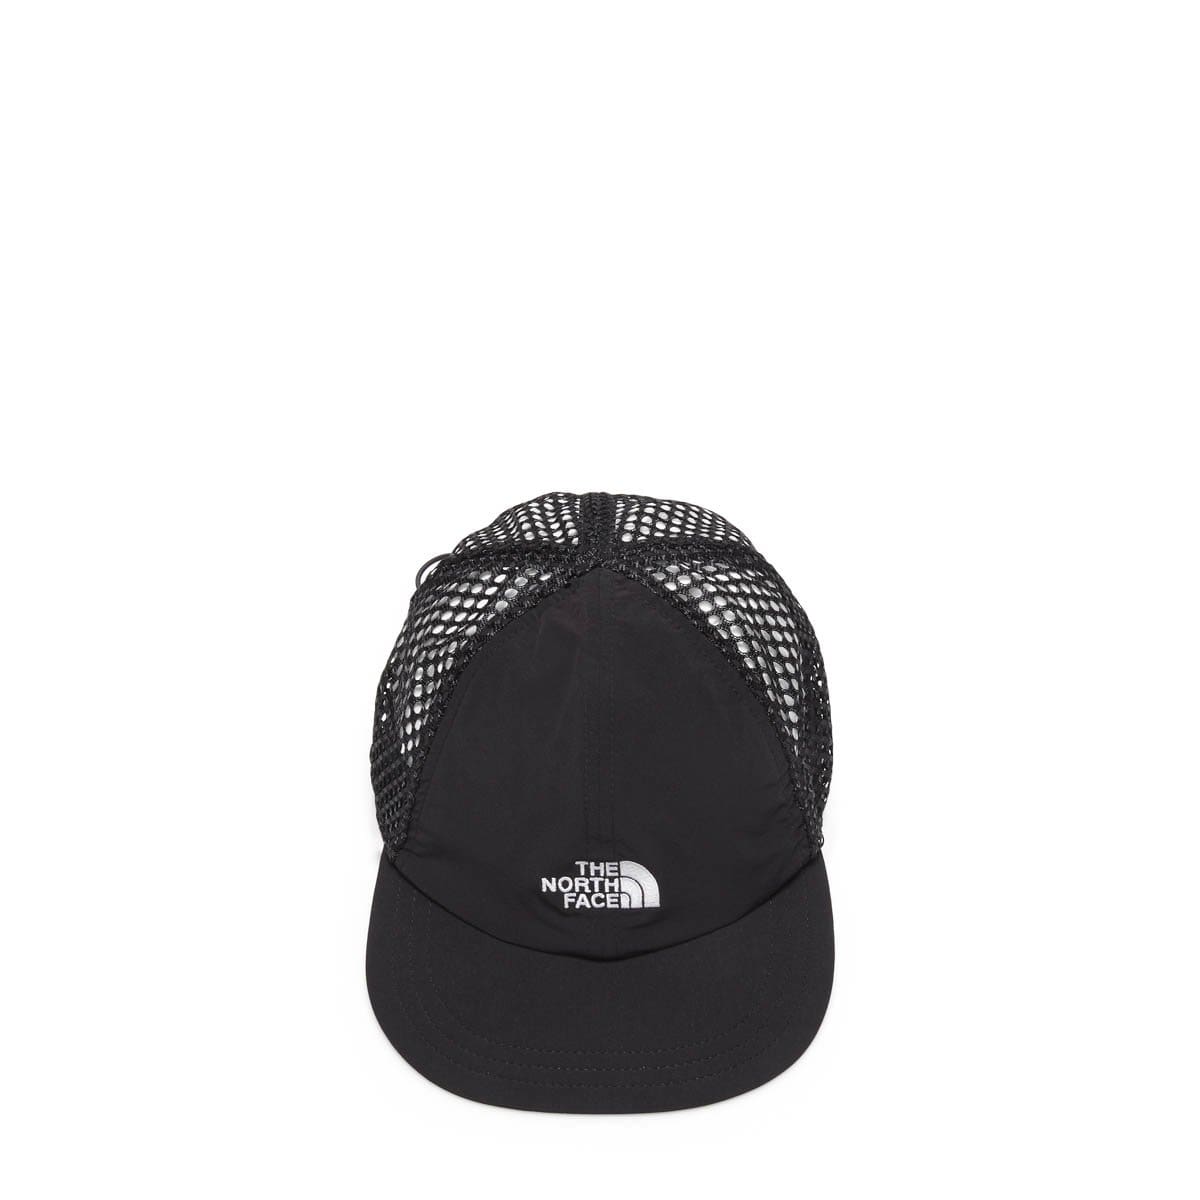 The North Face Headwear TNF BLACK / O/S RUNNER MESH CAP